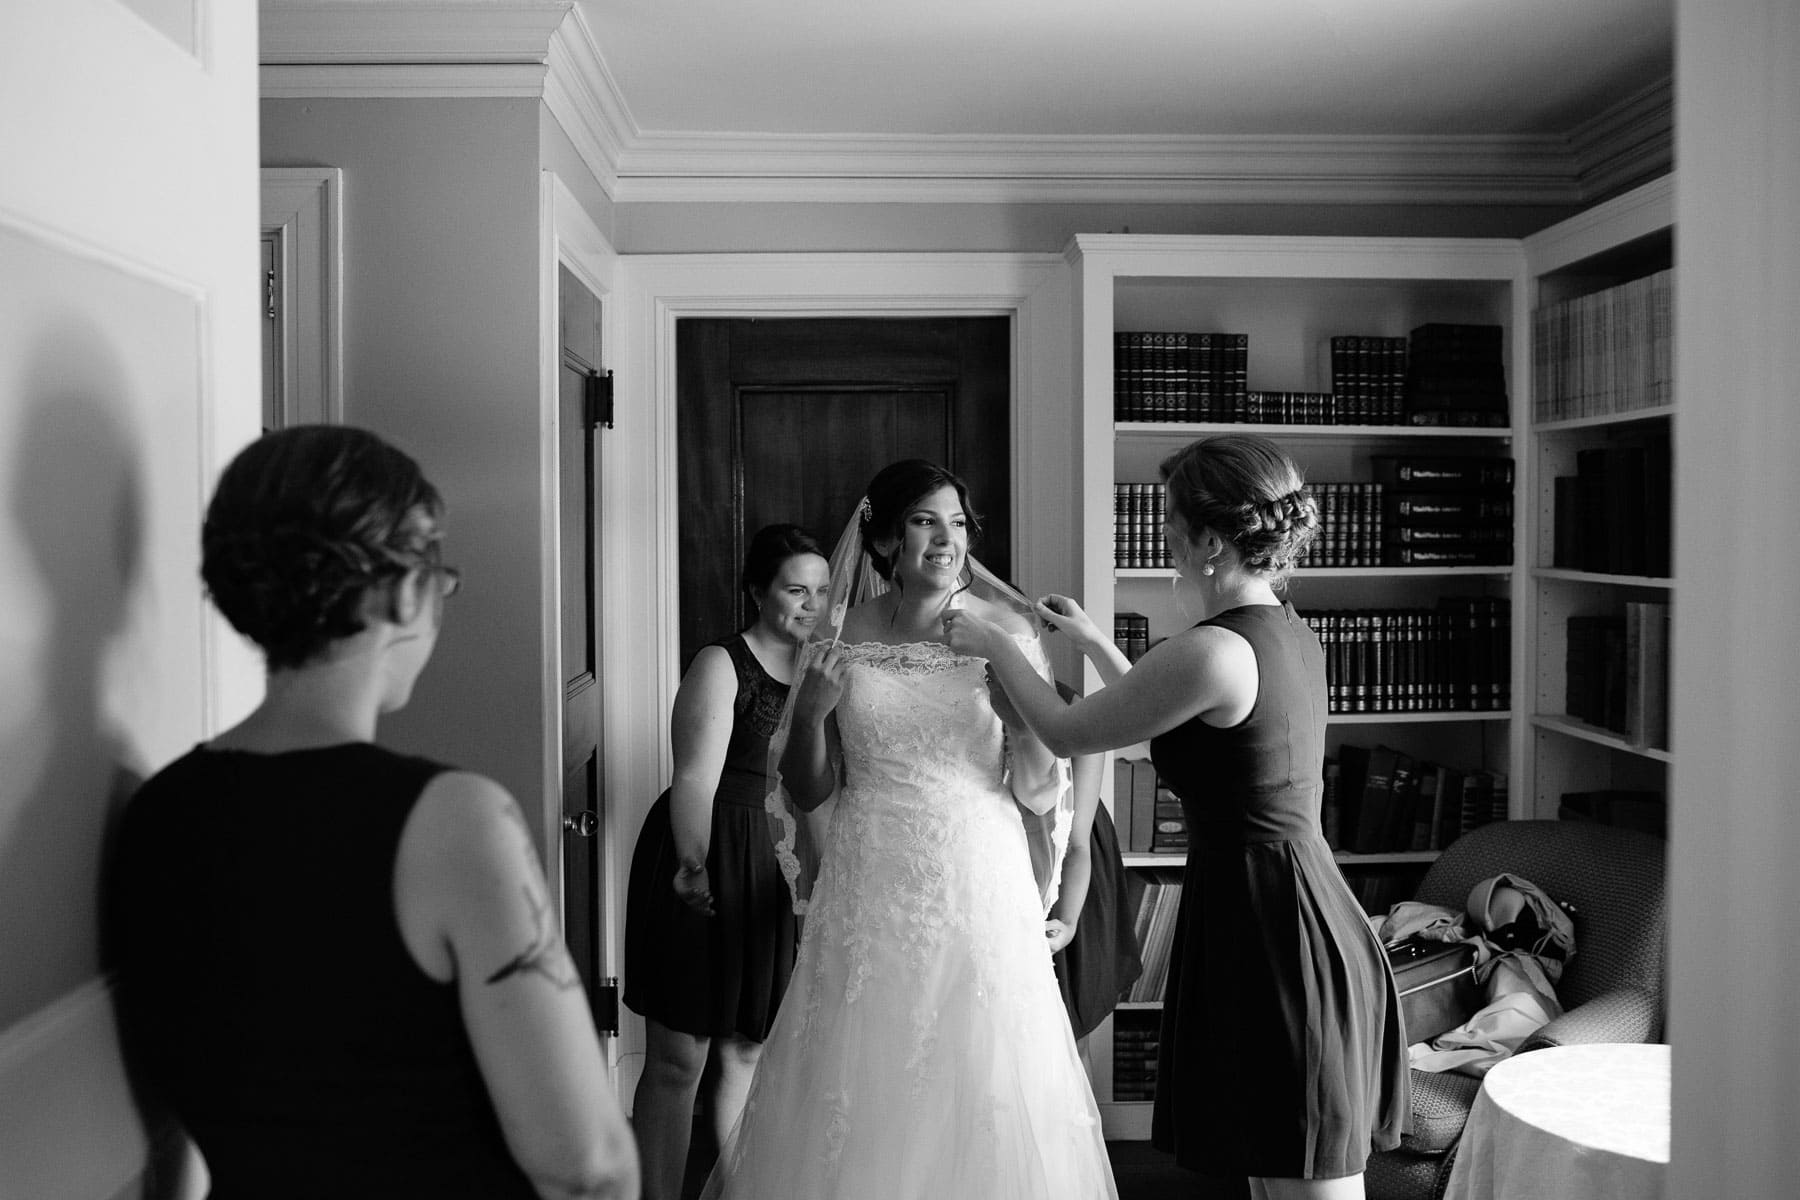 Maggie and Tom's wedding at the Endicott Estate in Dedham, MA | Kelly Benvenuto Photography | Boston Wedding Photographer